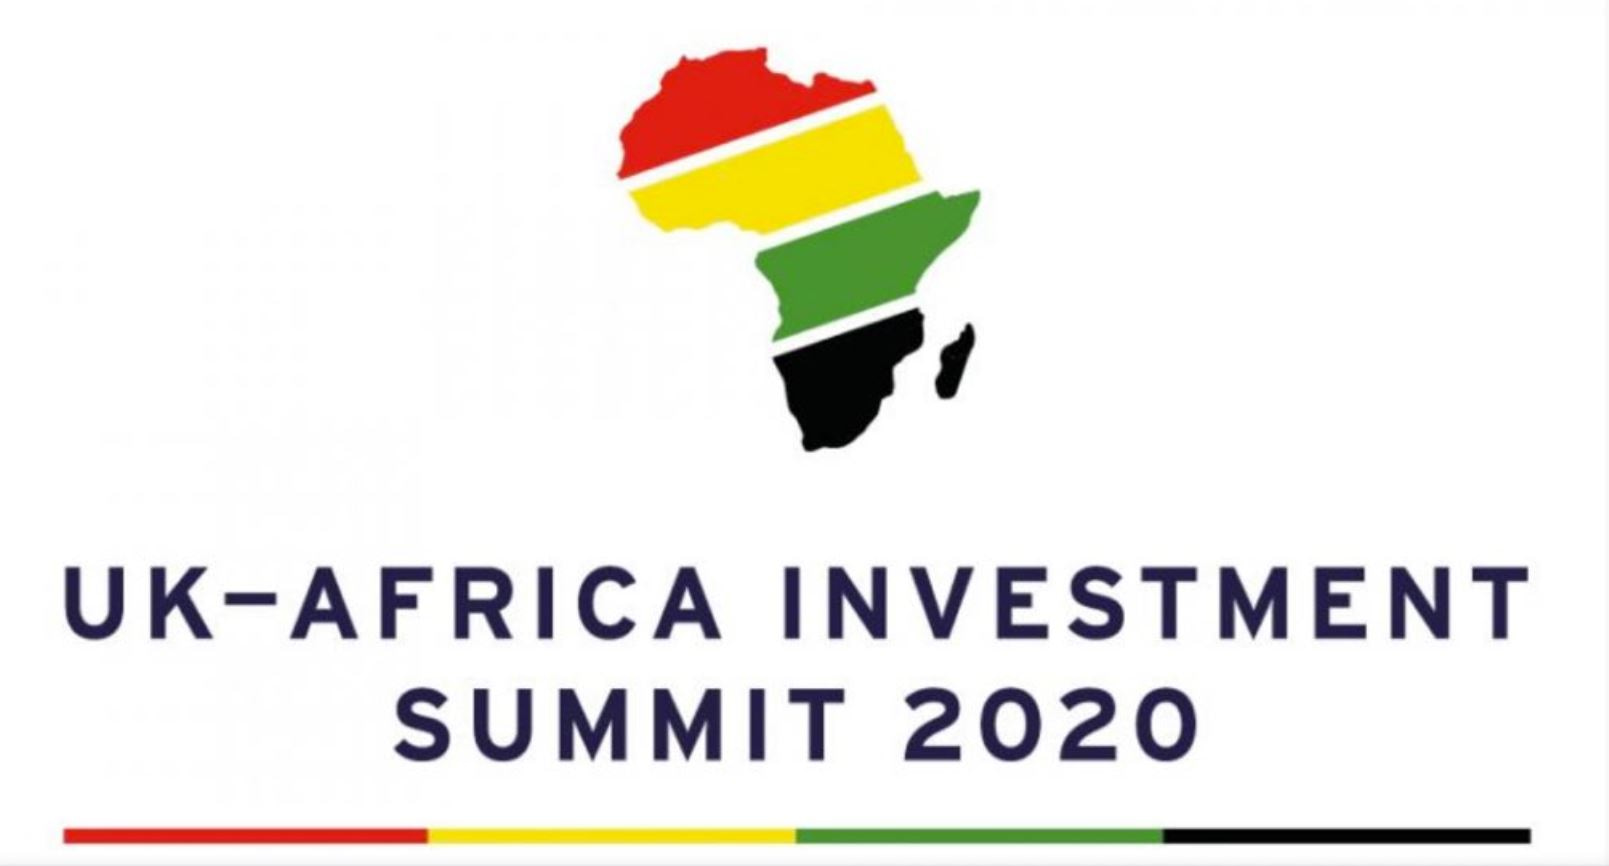 Africa summit on investment